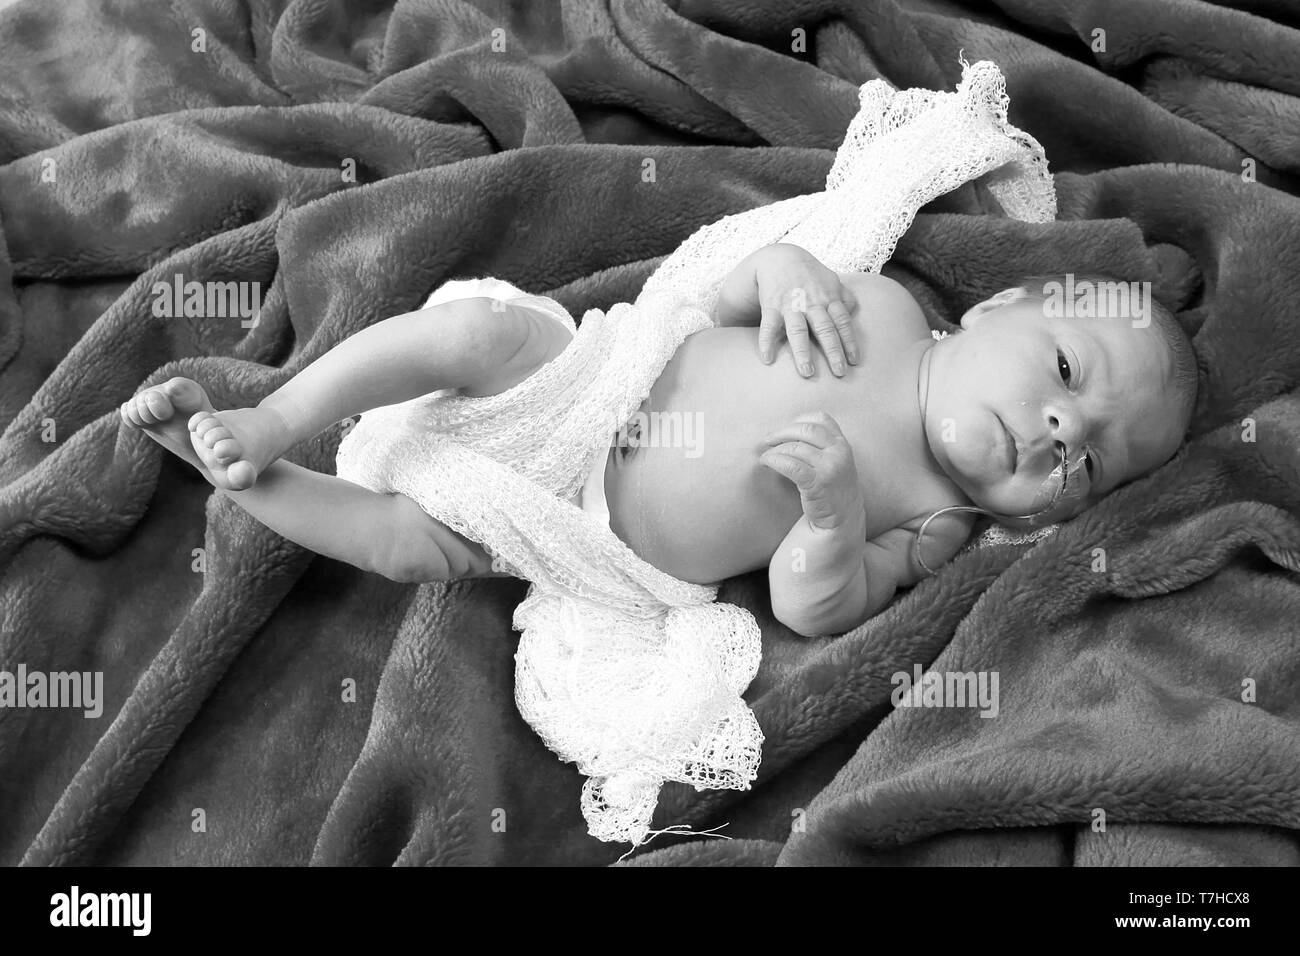 premature baby girl with feeding tube, NG tube Stock Photo